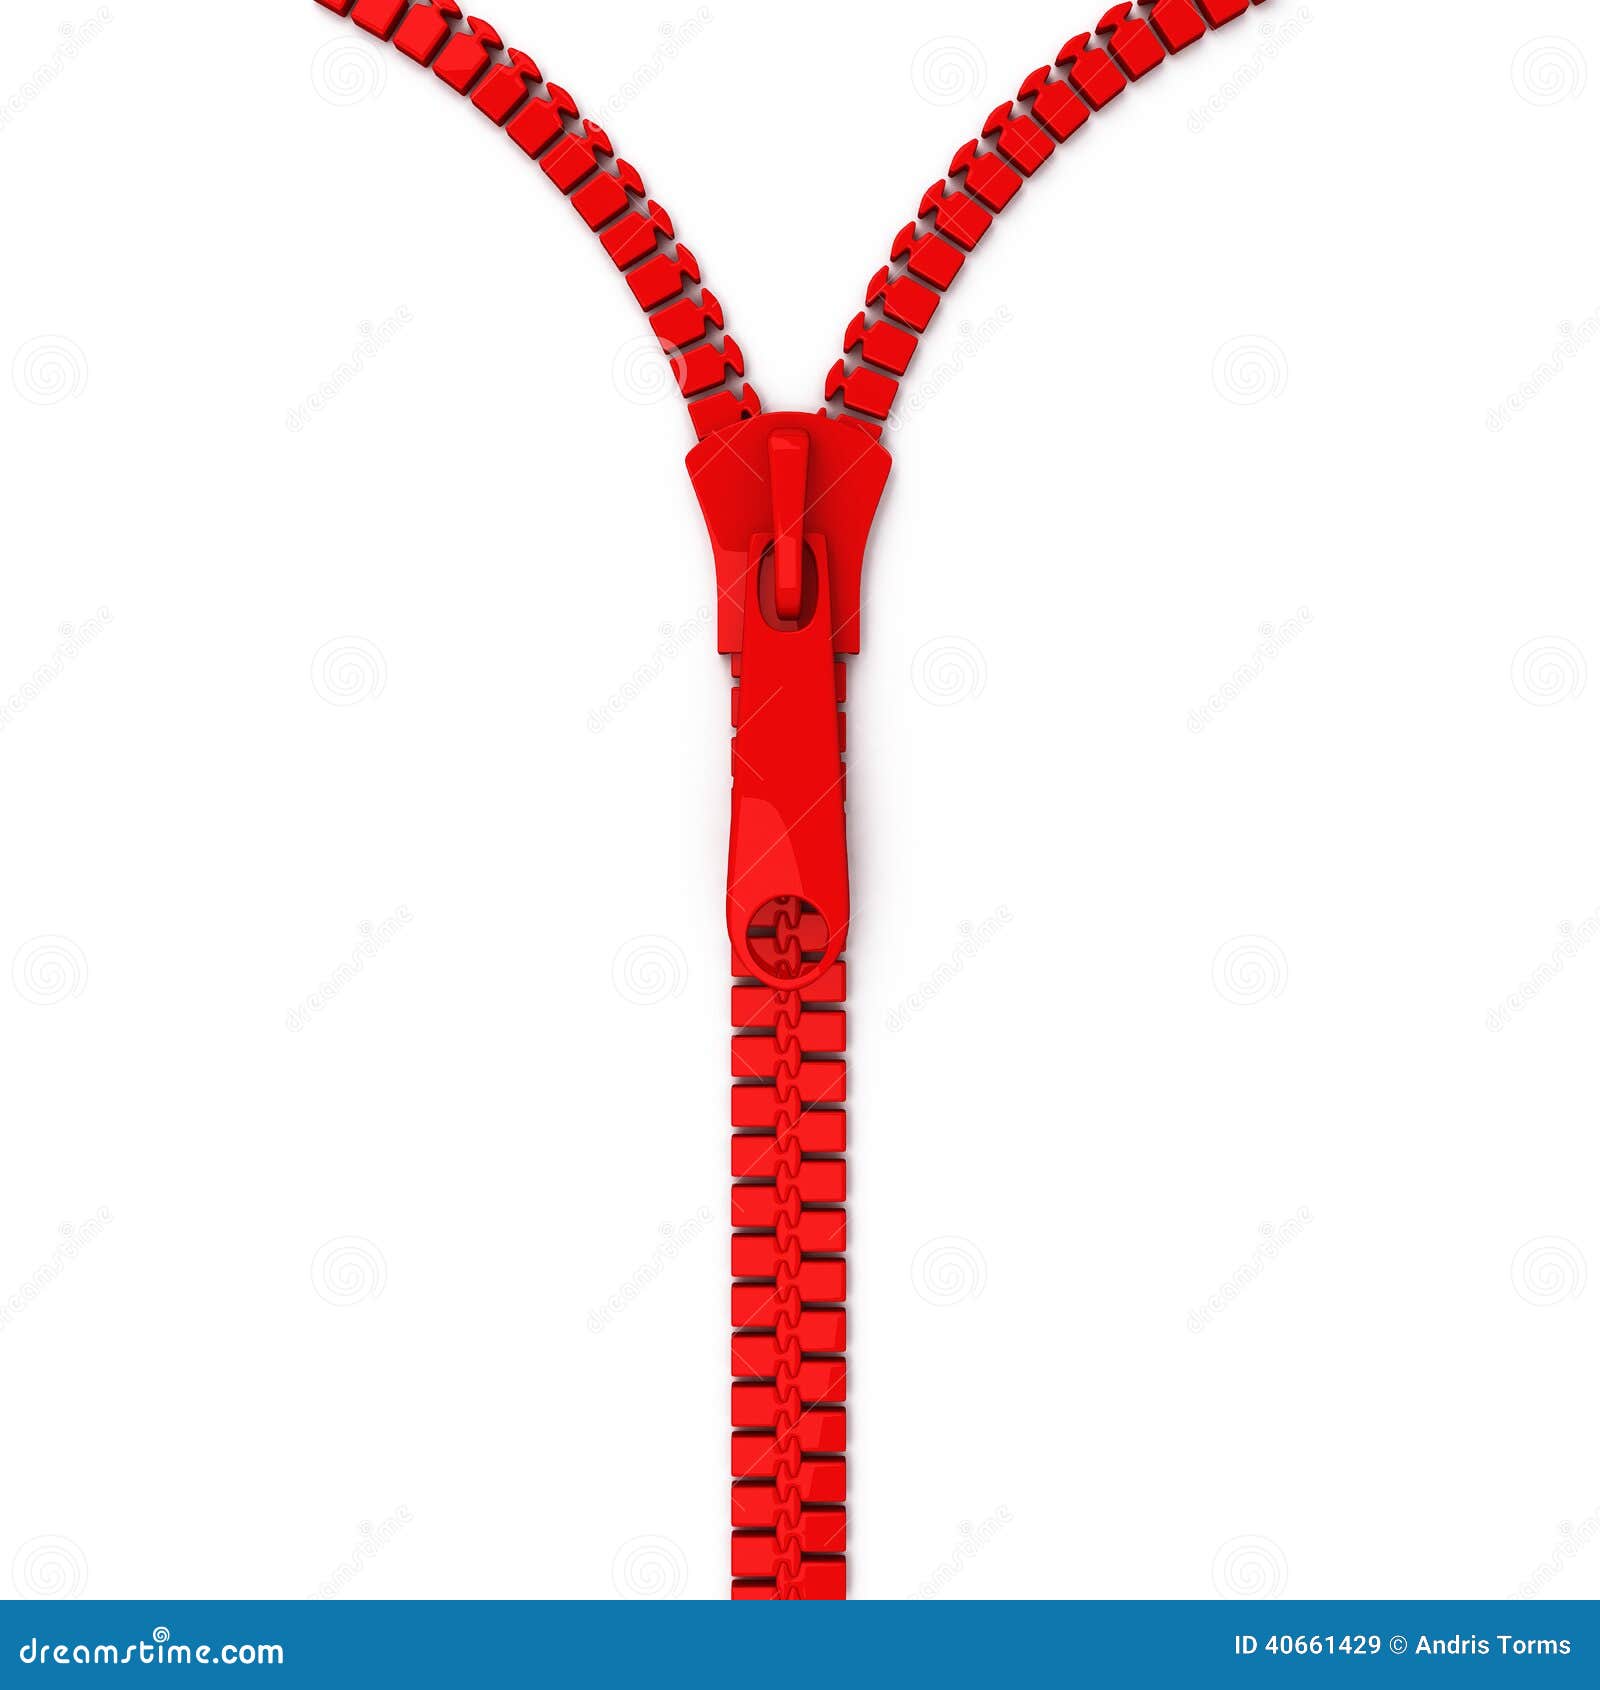 animated zipper clipart - photo #19